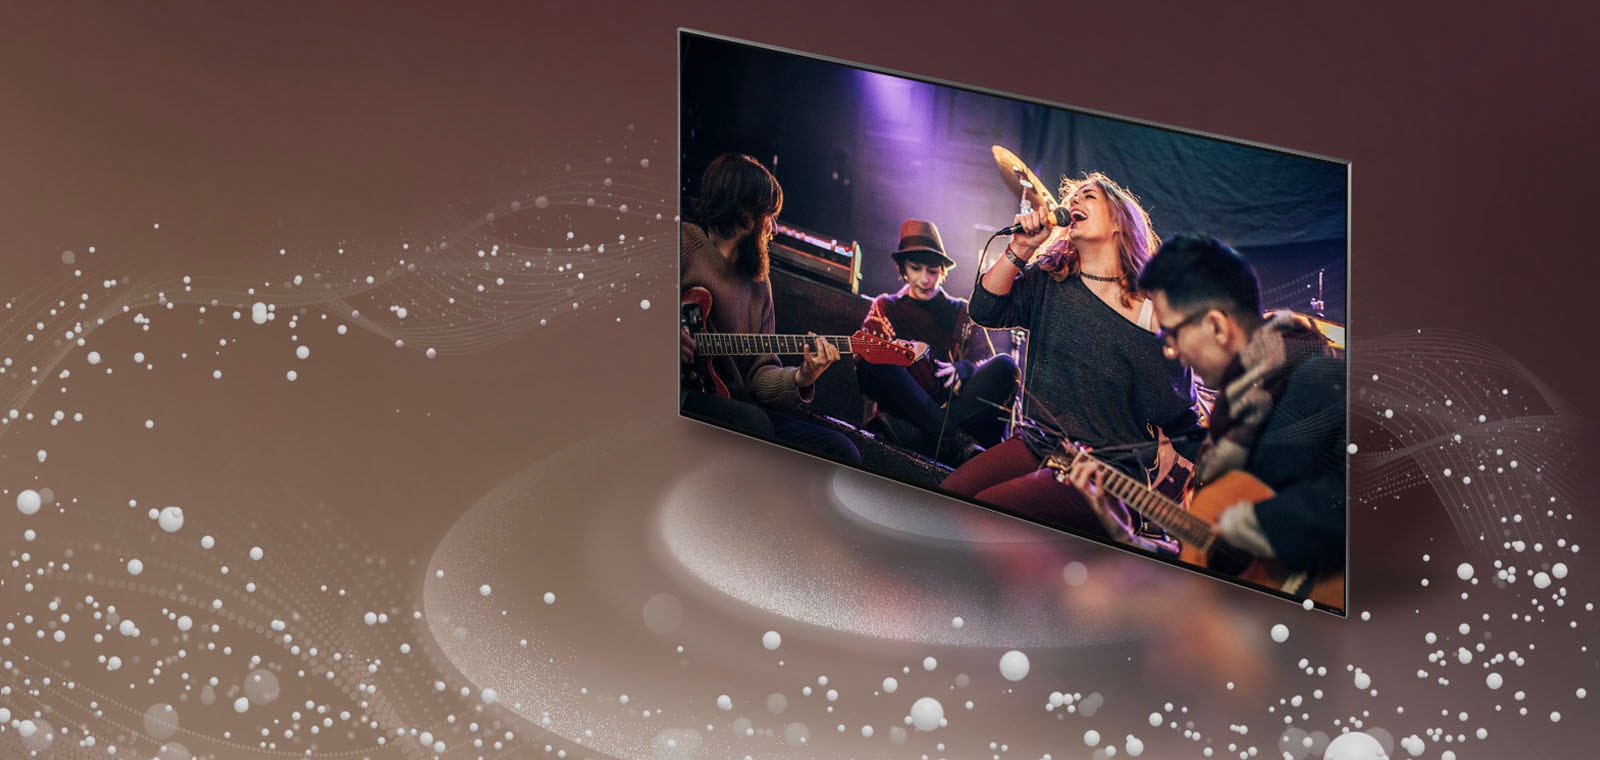 LG TV，隨著音效泡泡與波浪從螢幕發射，並填滿空間。